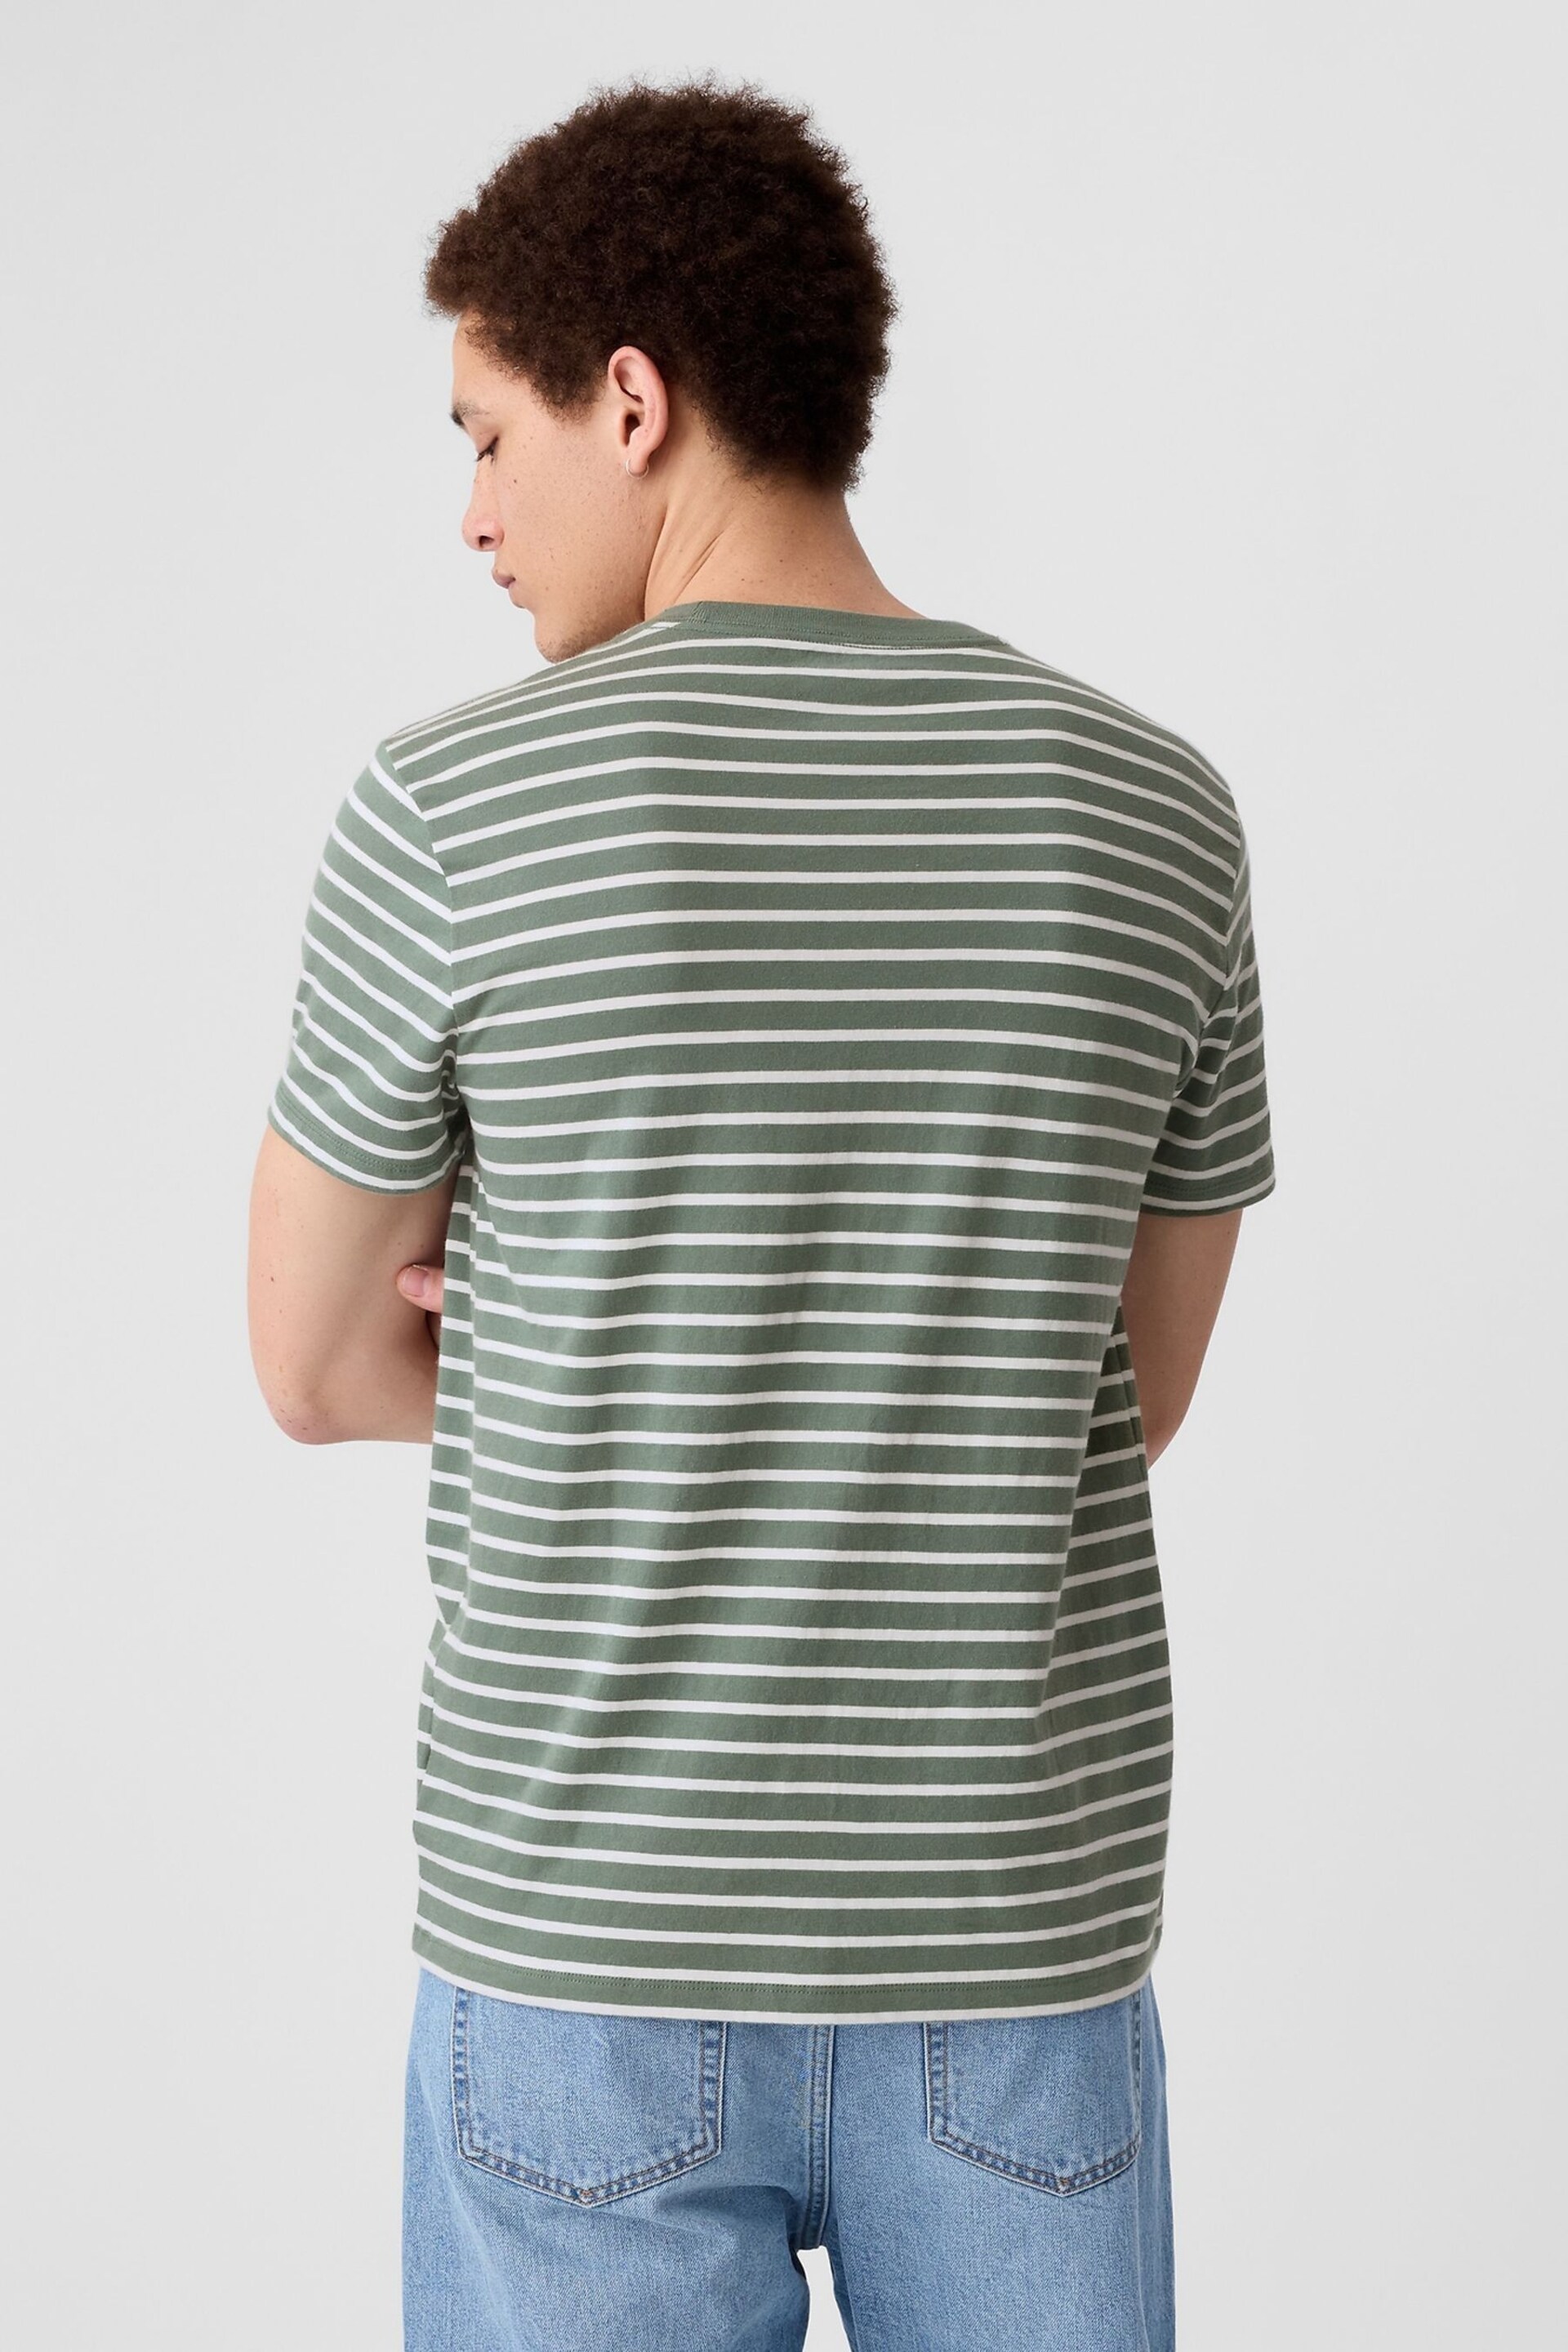 Gap Green Cotton Everyday Soft Stripe T-Shirt - Image 2 of 3